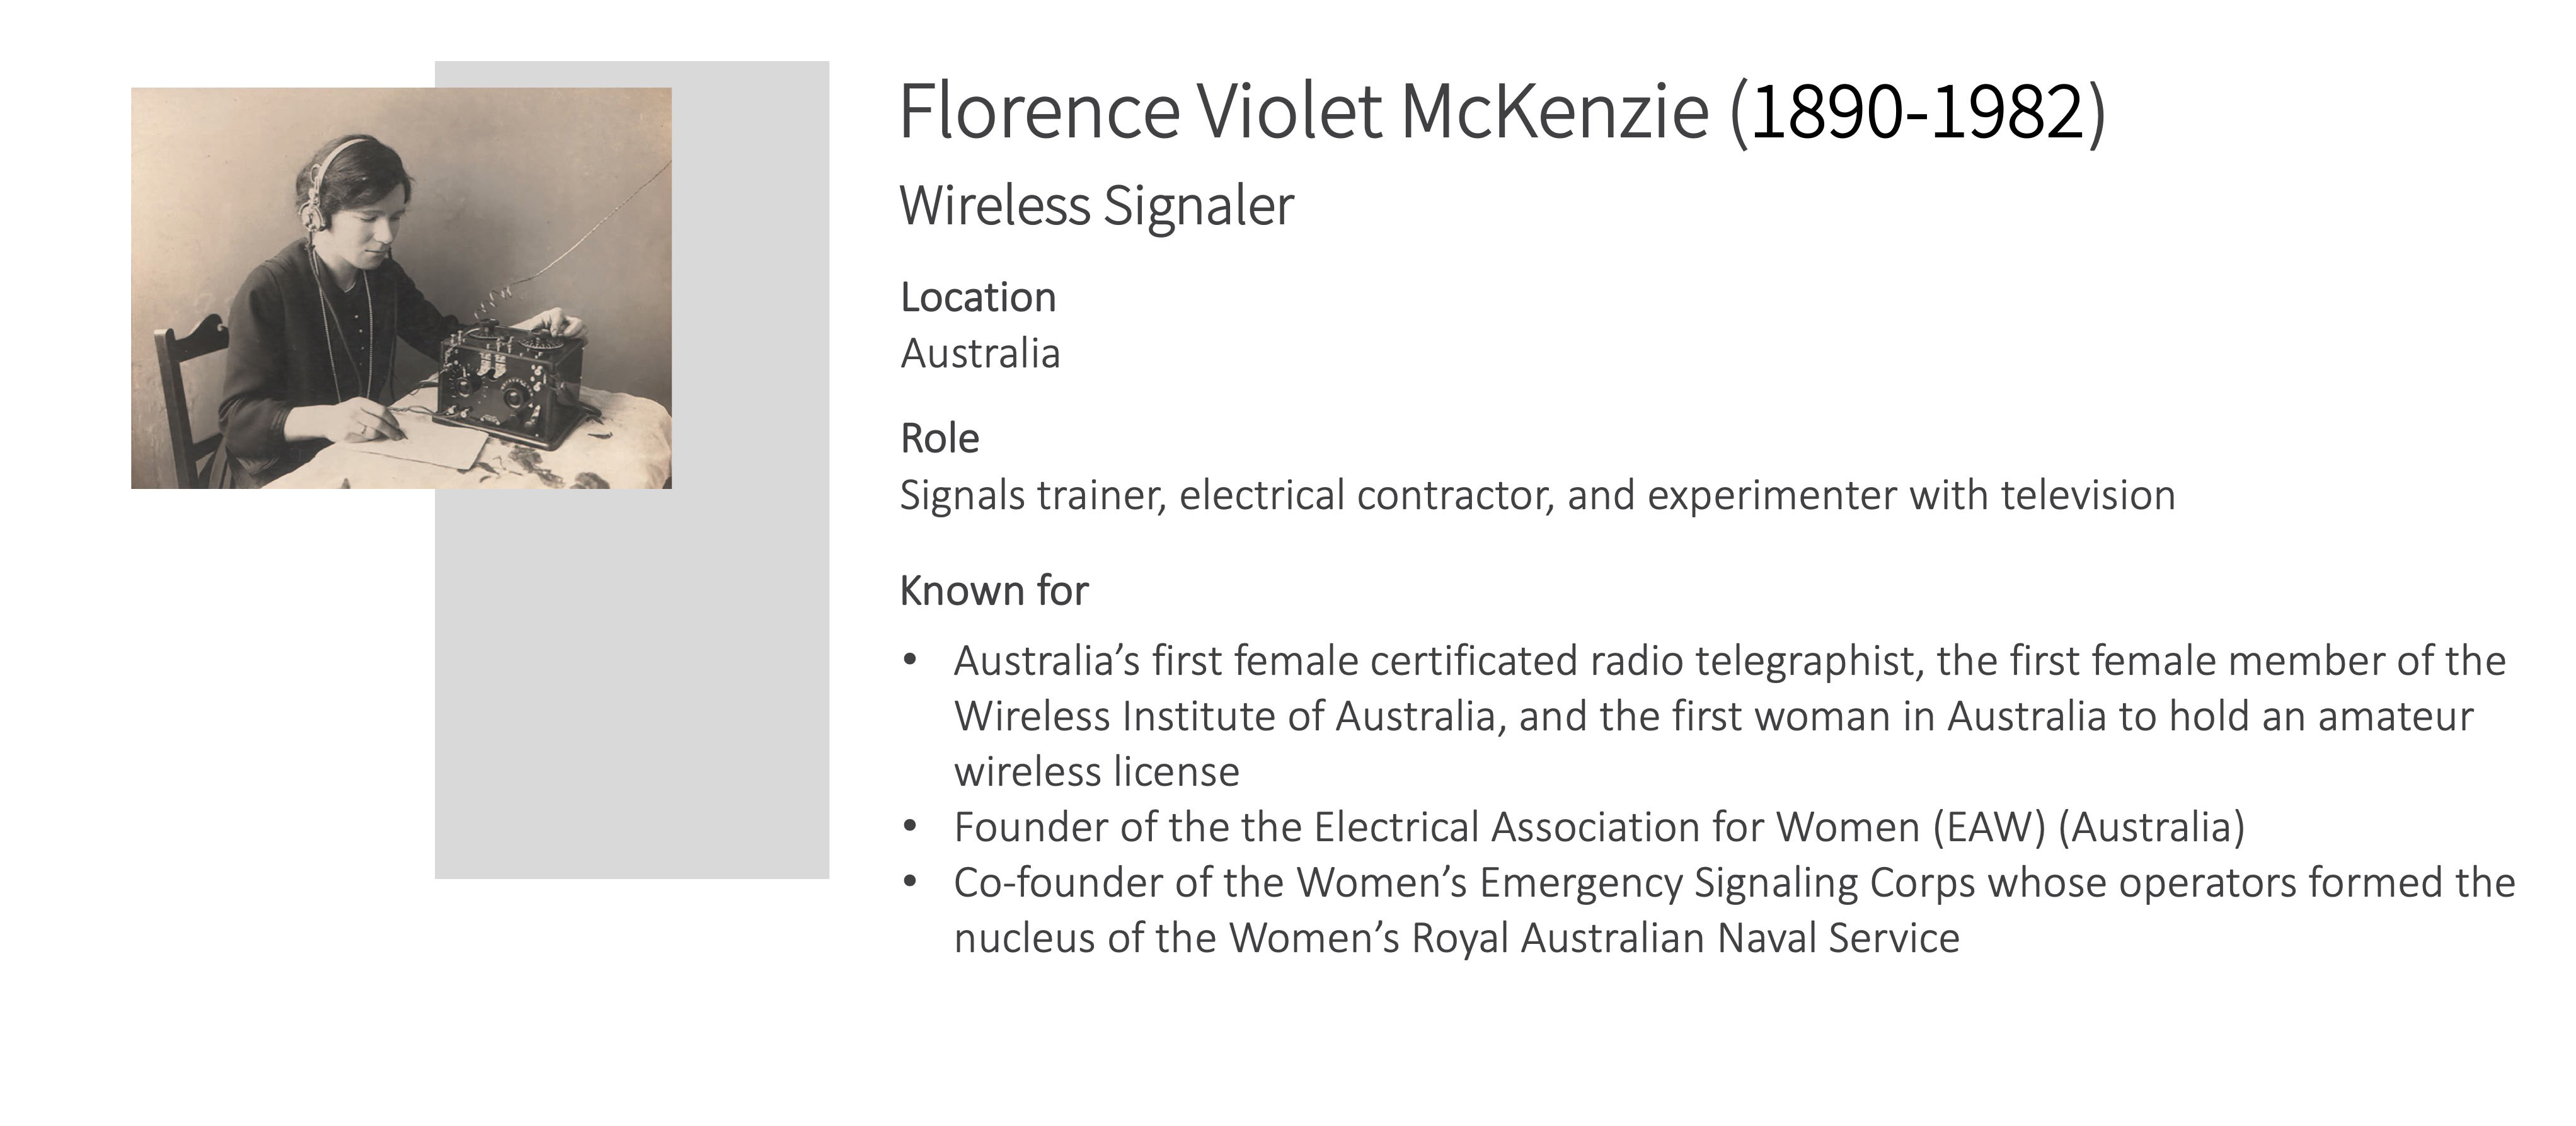 Florence Violet McKenzie